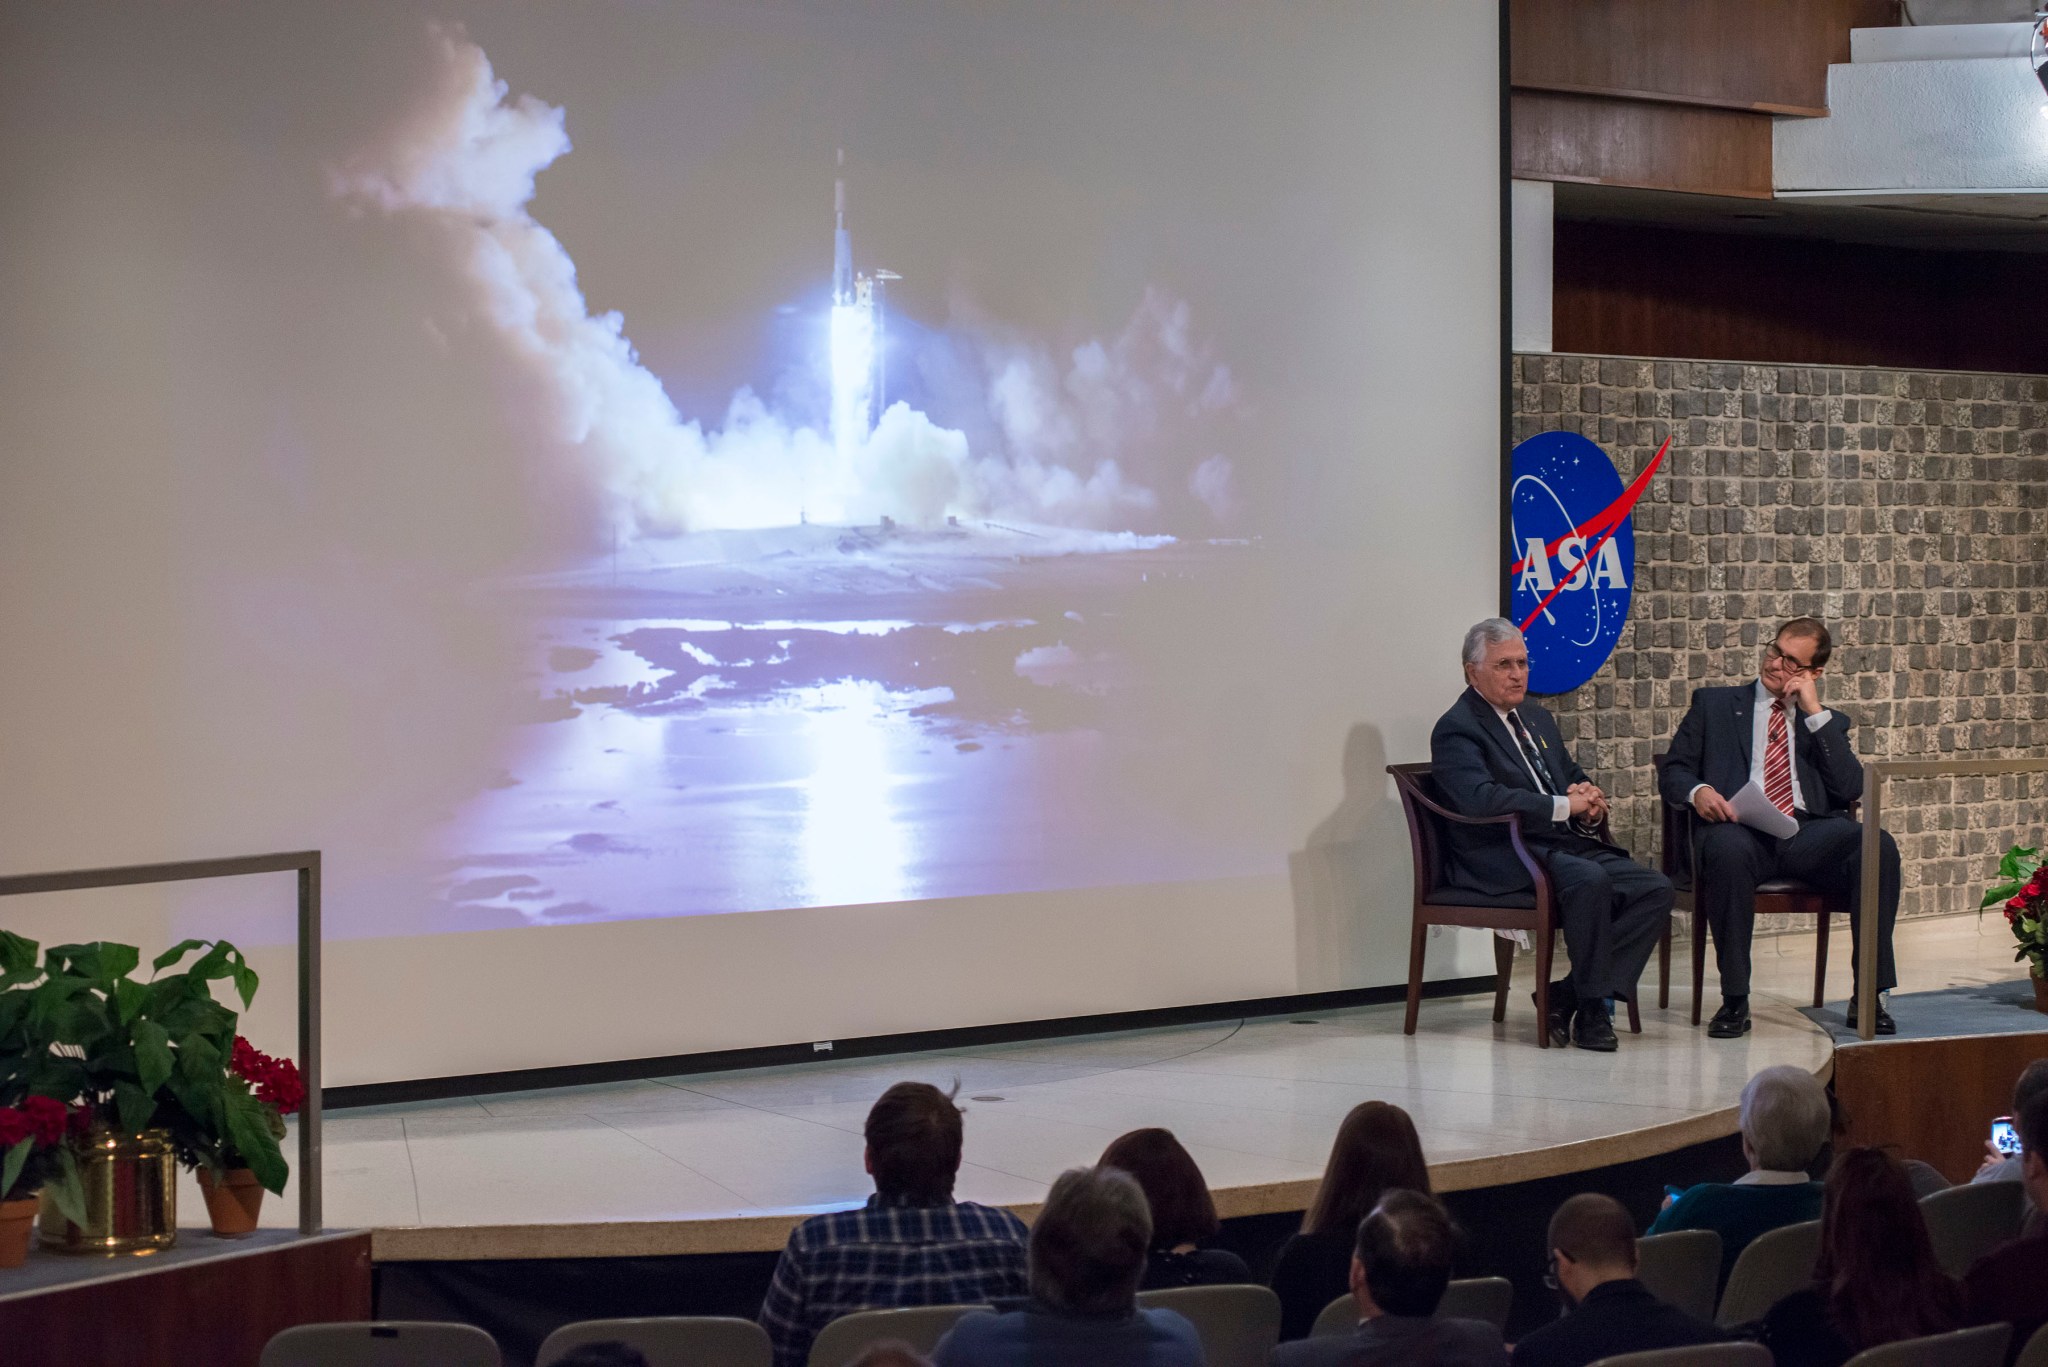 Apollo 17 lunar module pilot Harrison Schmitt, left, shared his experiences as an astronaut and lunar geologist during a visit.